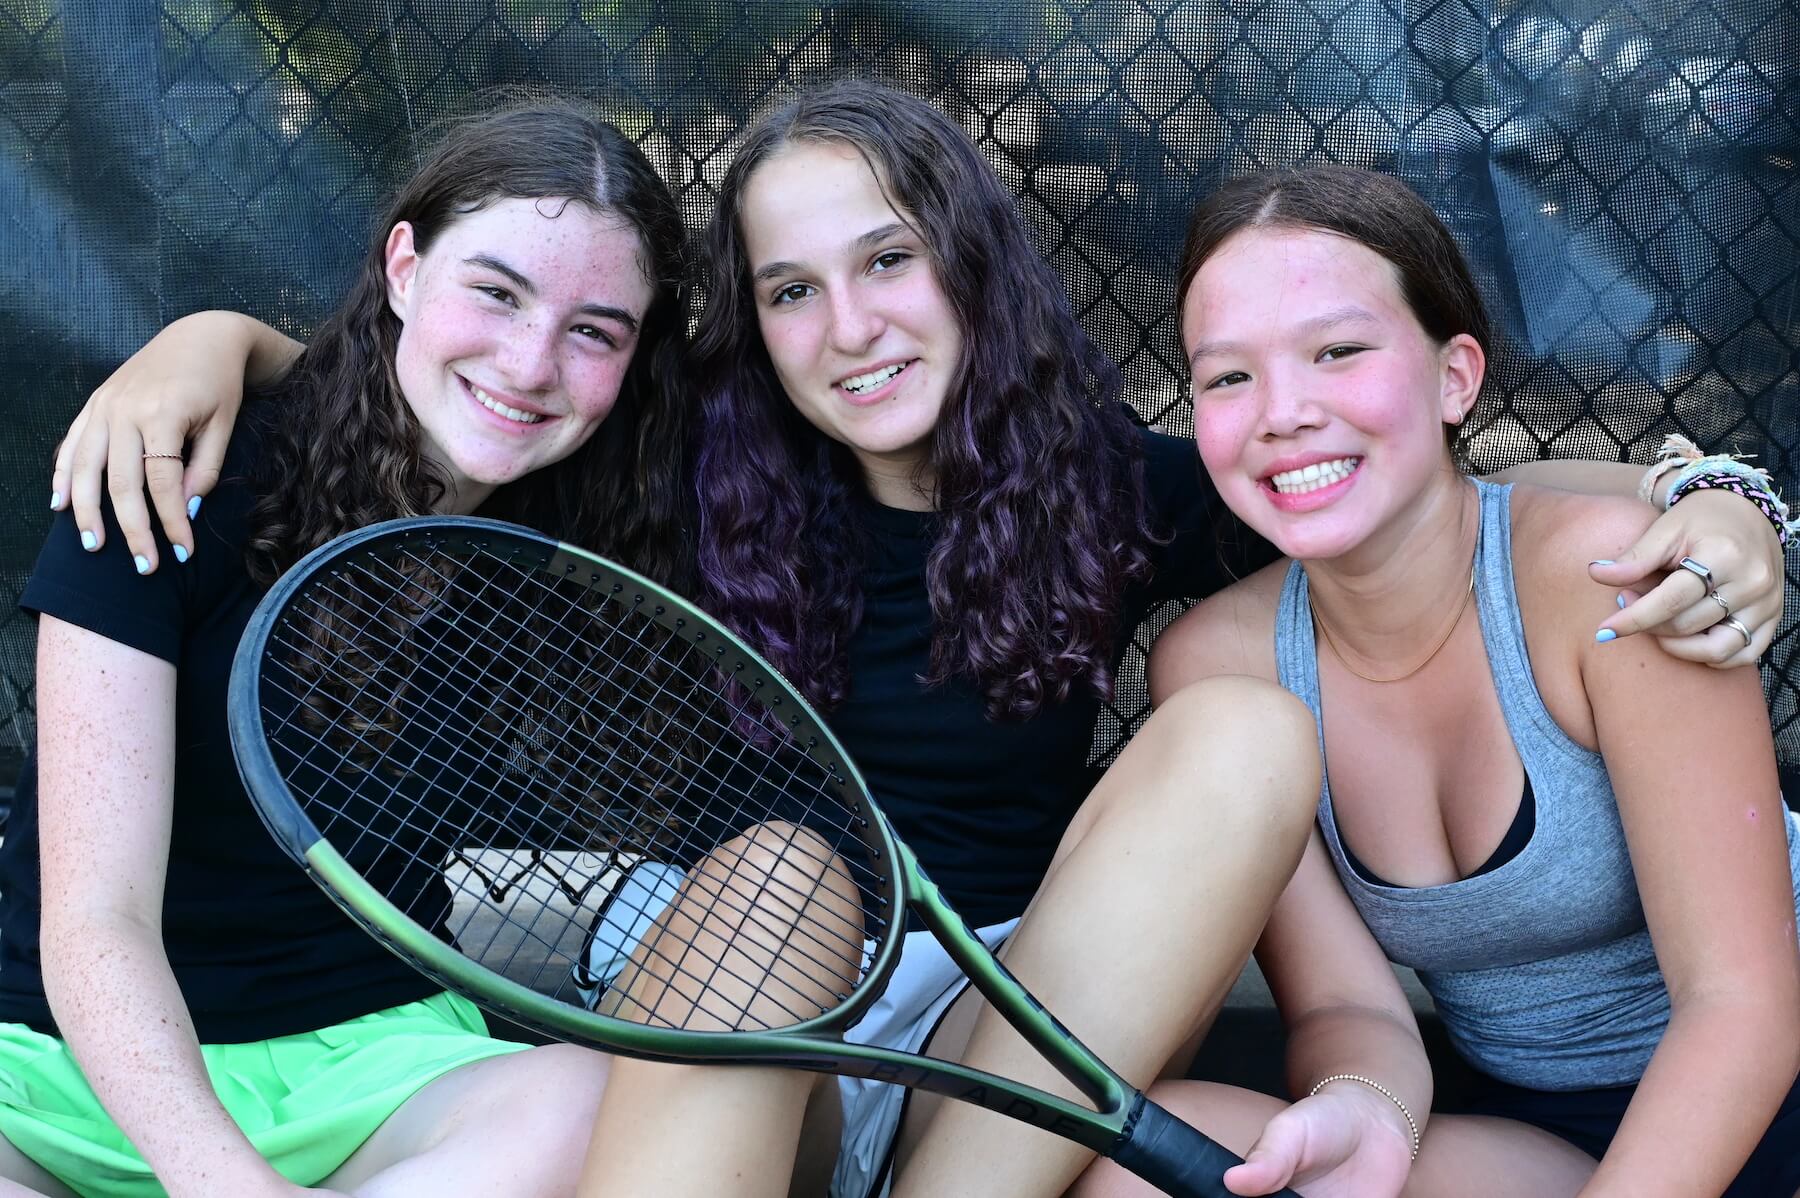 Ethical Culture Fieldston School Fieldston Upper girls tennis team smiling for a photo